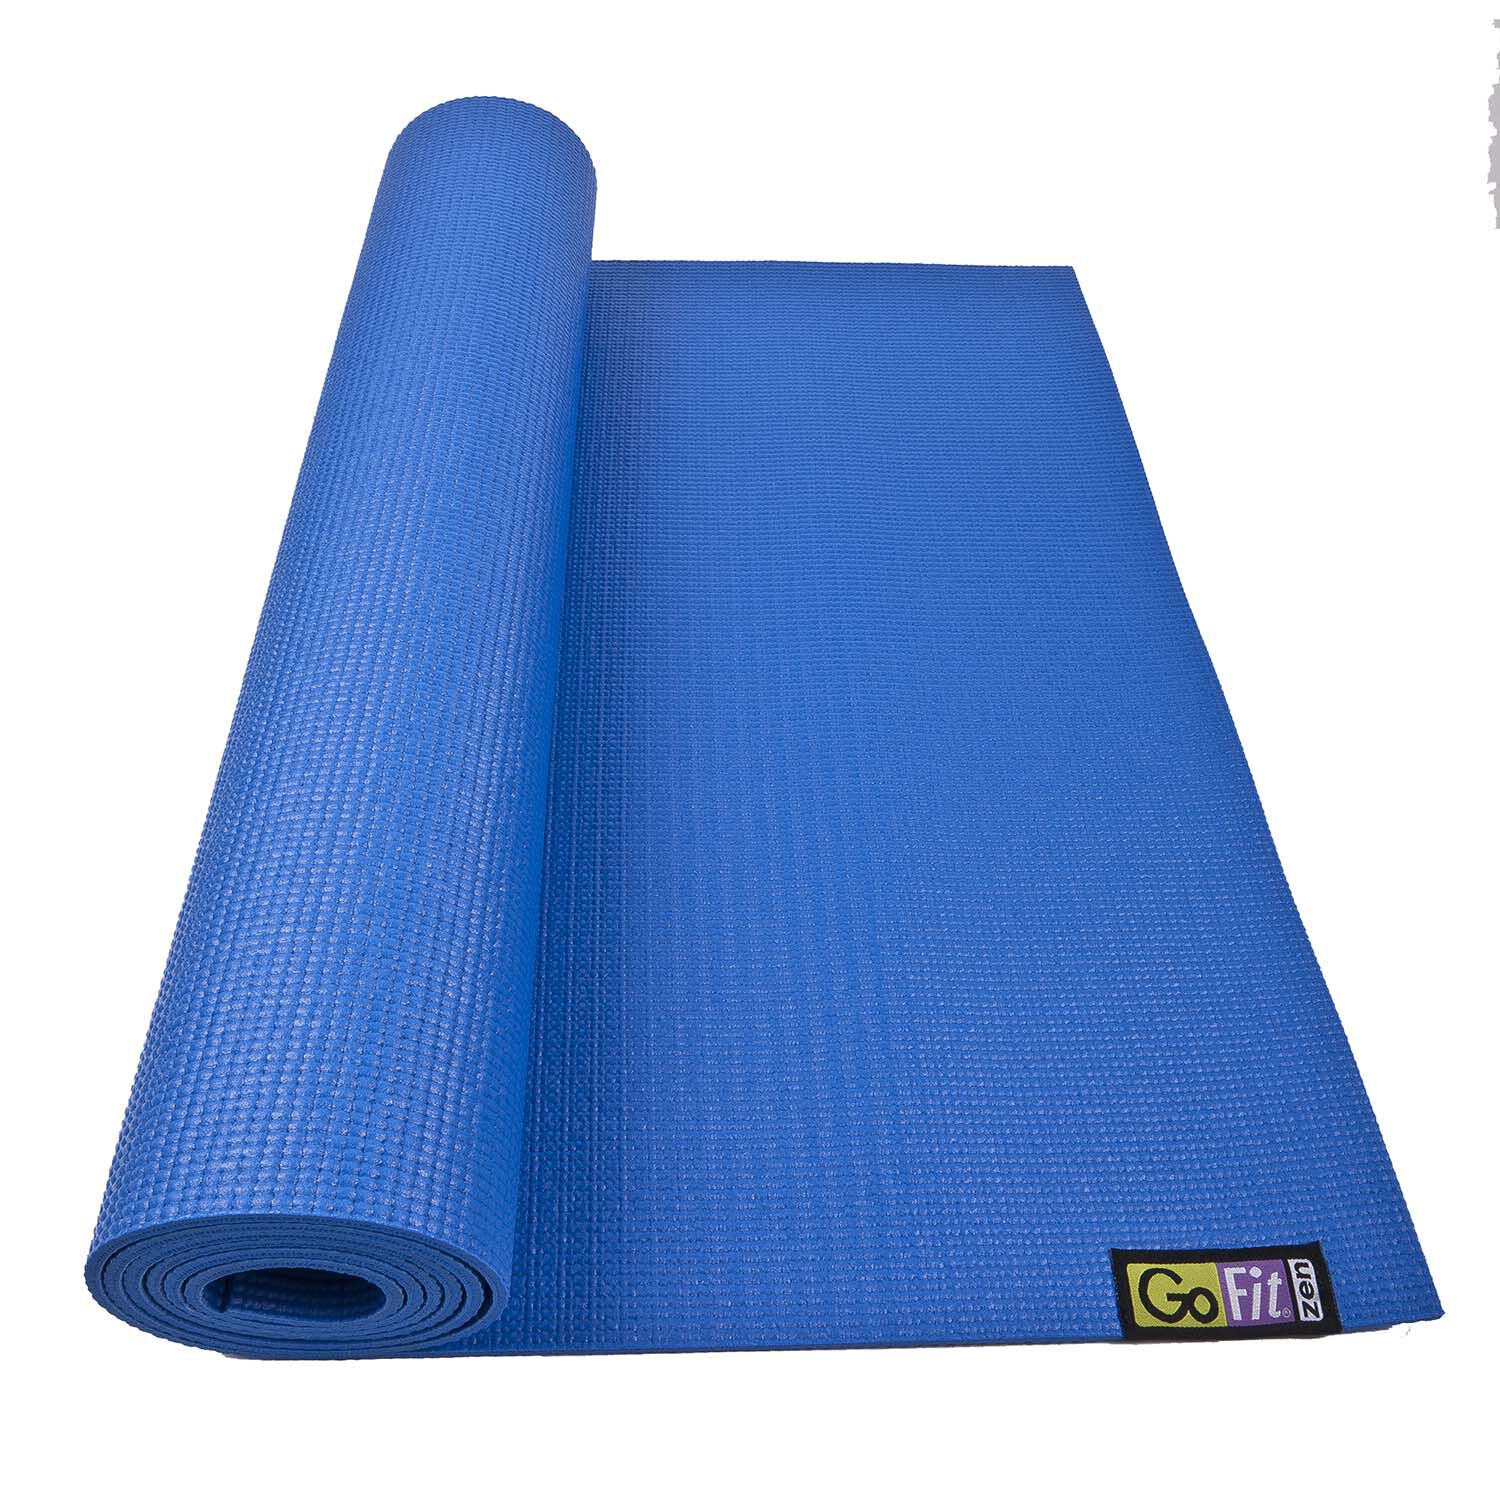 gofit exercise mat